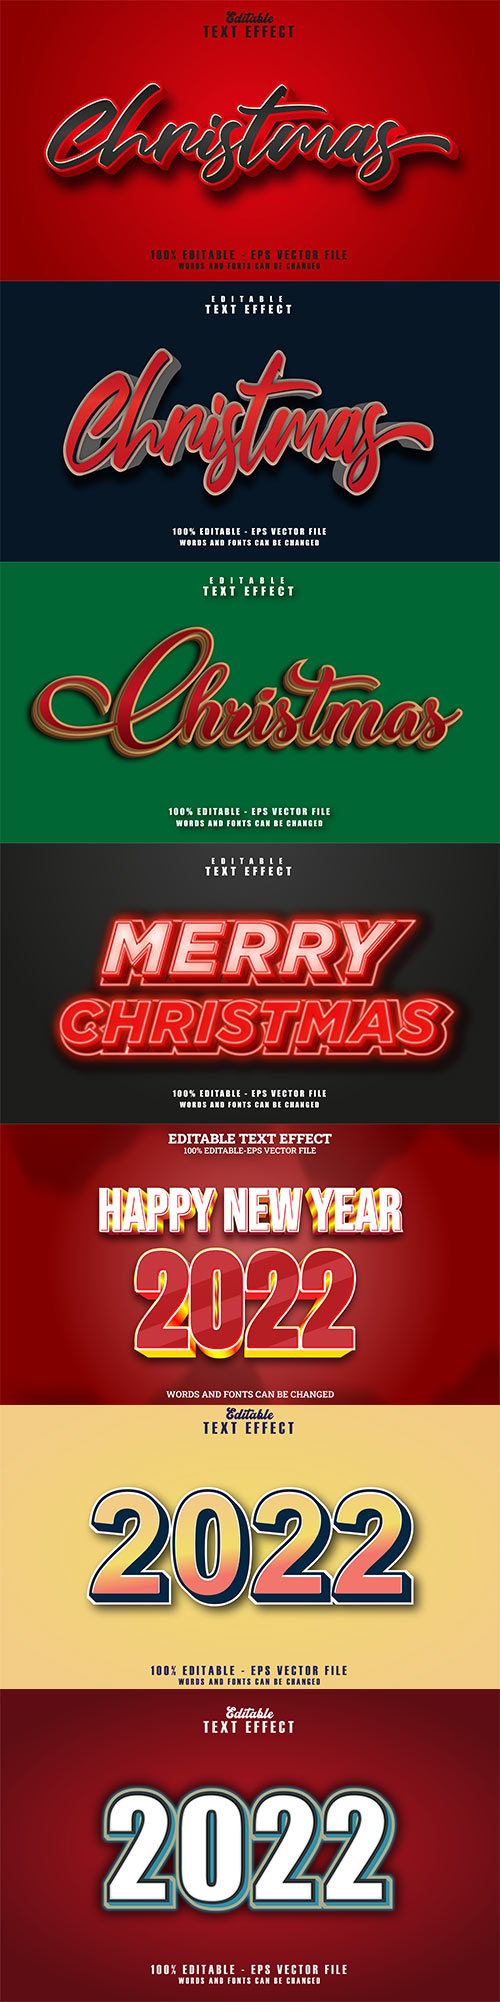 2022 text effect, Christmas text vector